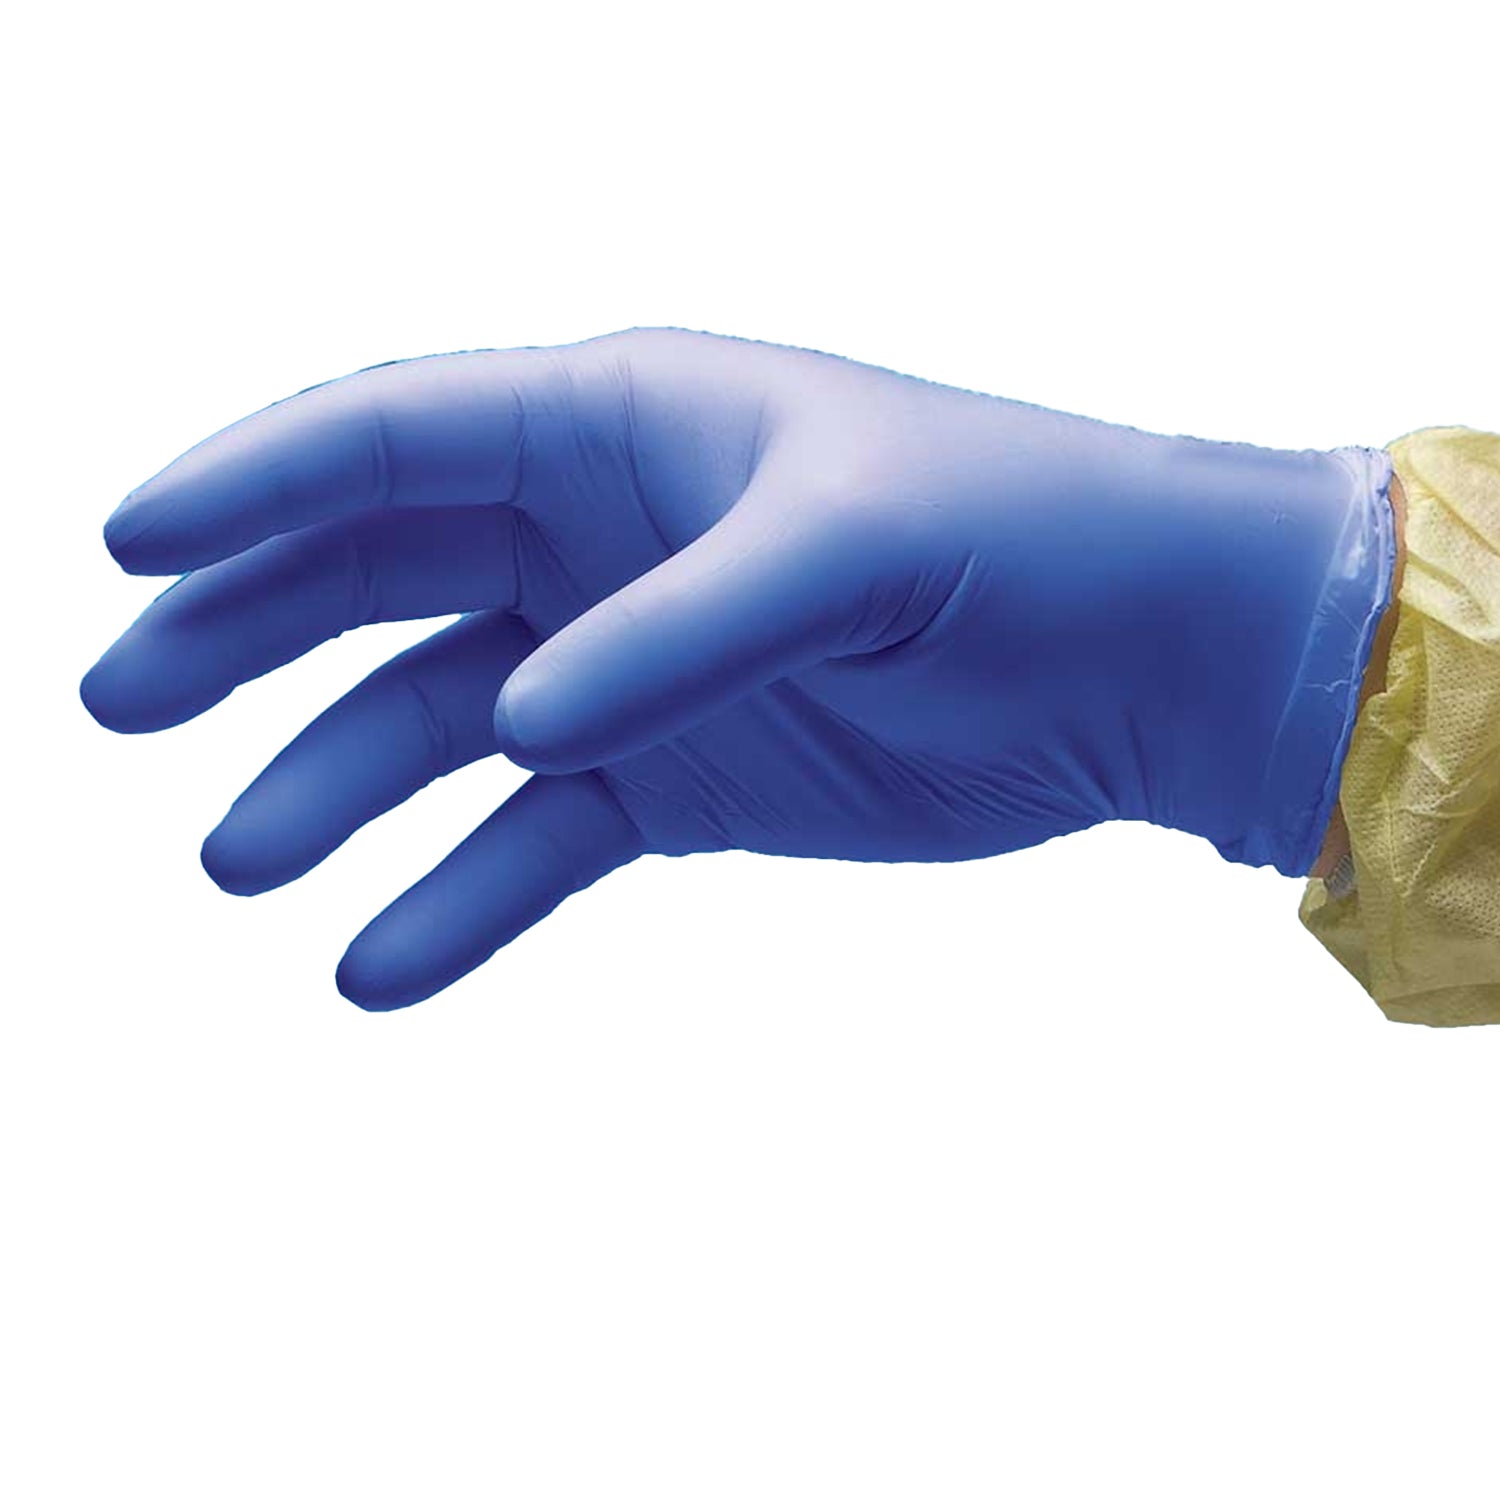 Premier AF Nitrile Examination Gloves | Sterile | Latex Free | Large | Pack of 50 Pairs